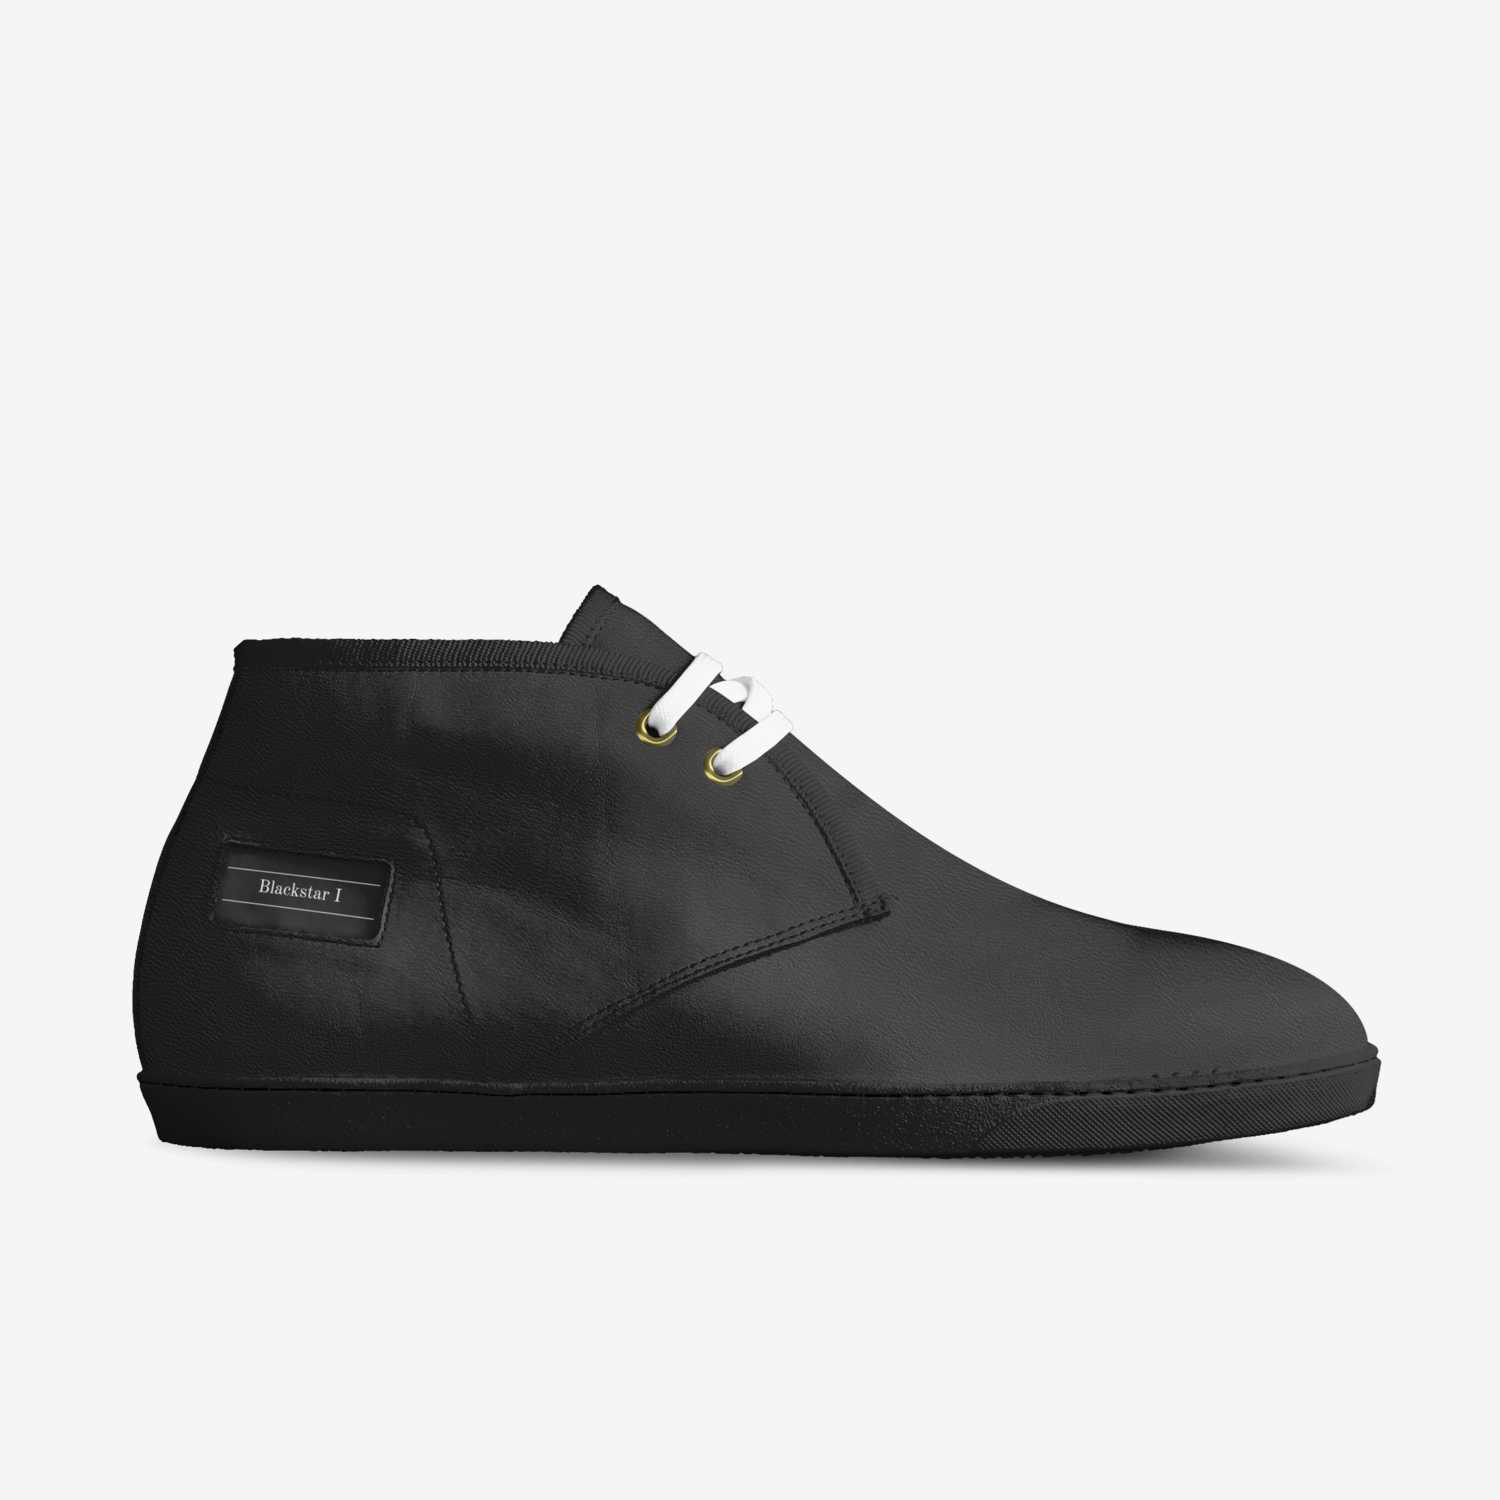 Blackstar I custom made in Italy shoes by Šimon Prek | Side view